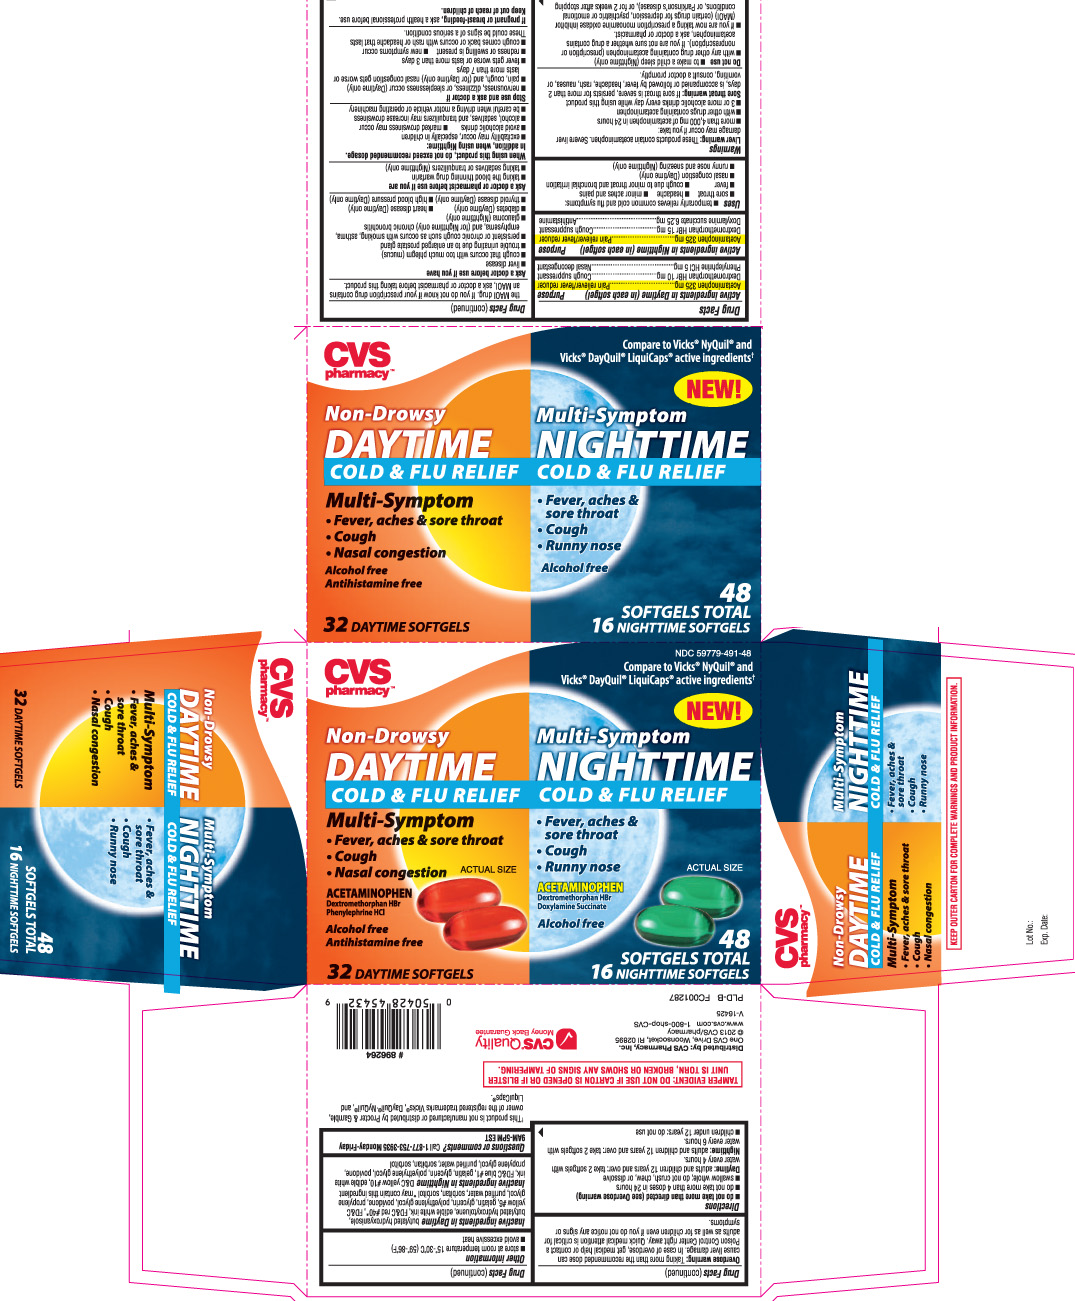 Acetaminophen 325 mg, Dextromethorphan HBr 10 mg, Phenylephrine HCl 5 mg, Dextromethorphan HBr 15 mg, Doxylamine succinate 6.25 mg